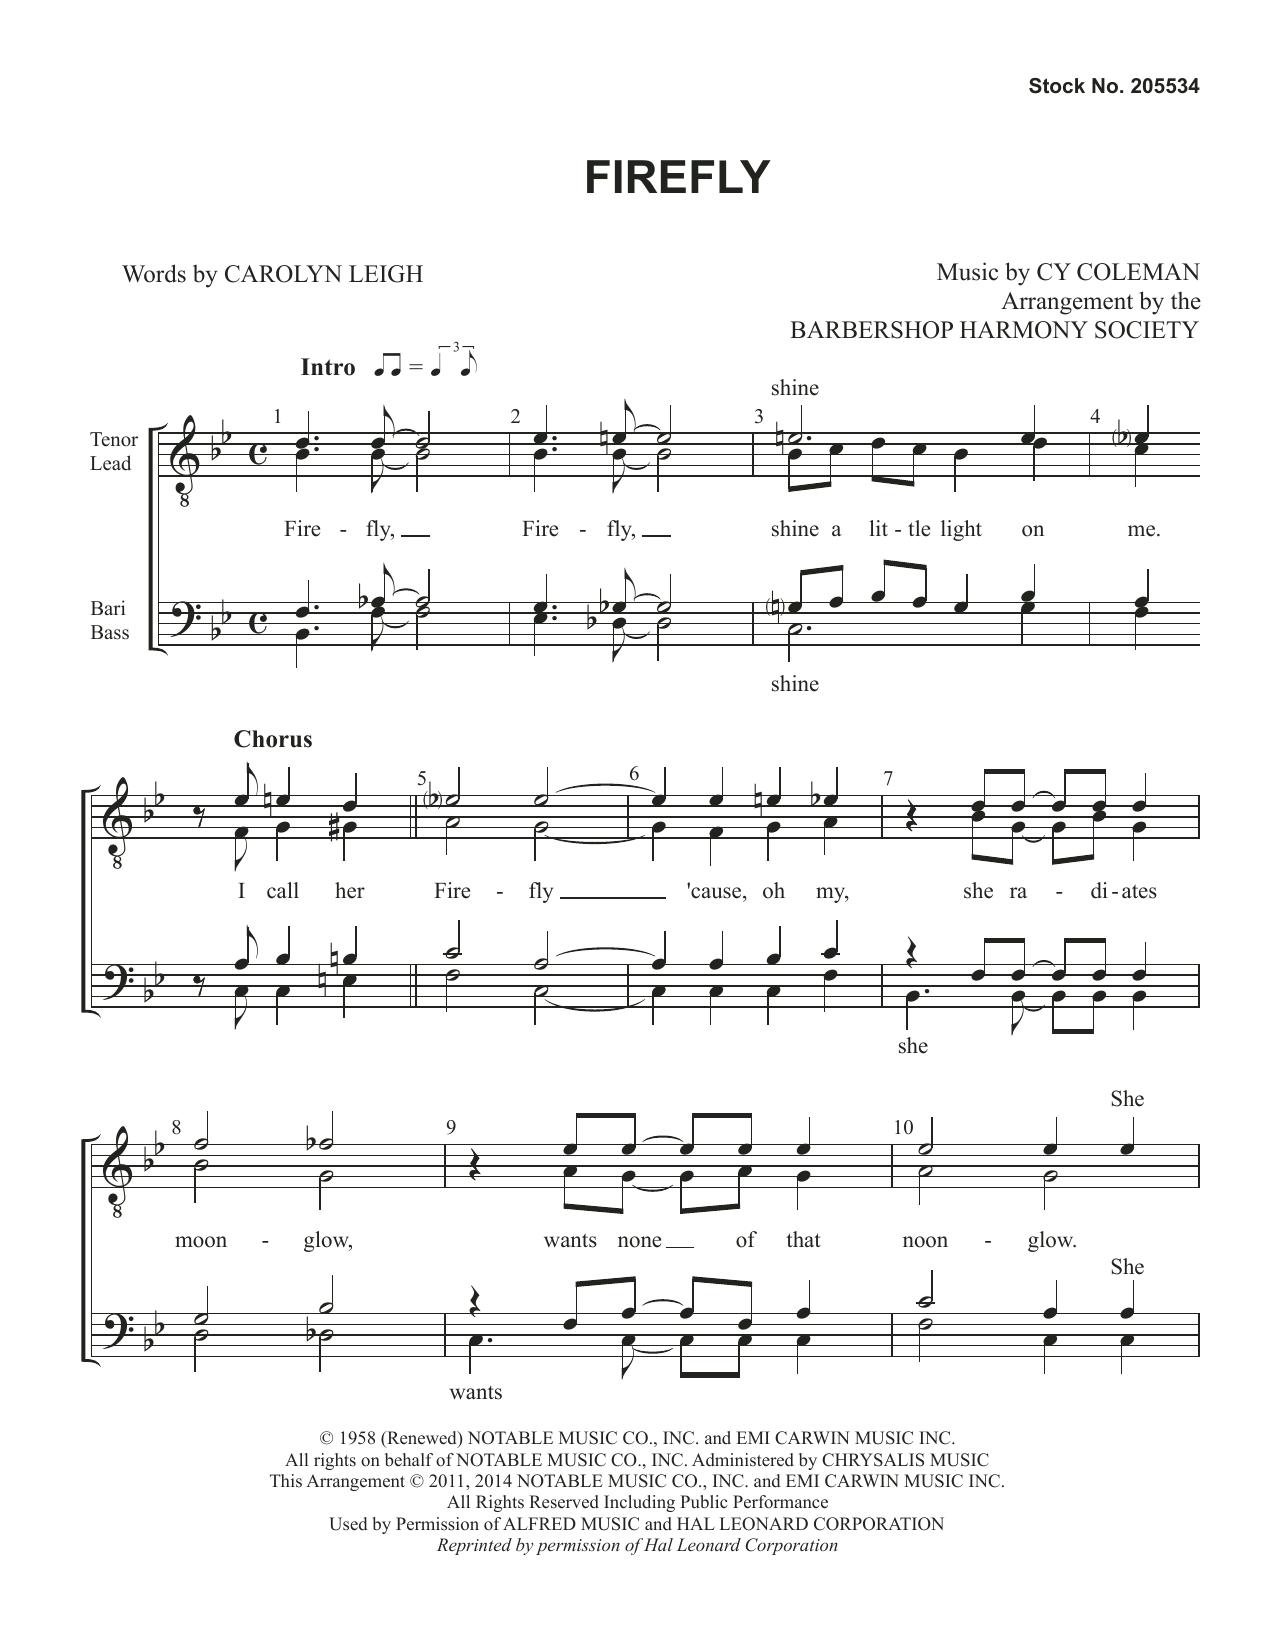 Tony Bennett Firefly (arr. Barbershop Harmony Society) sheet music notes and chords arranged for TTBB Choir